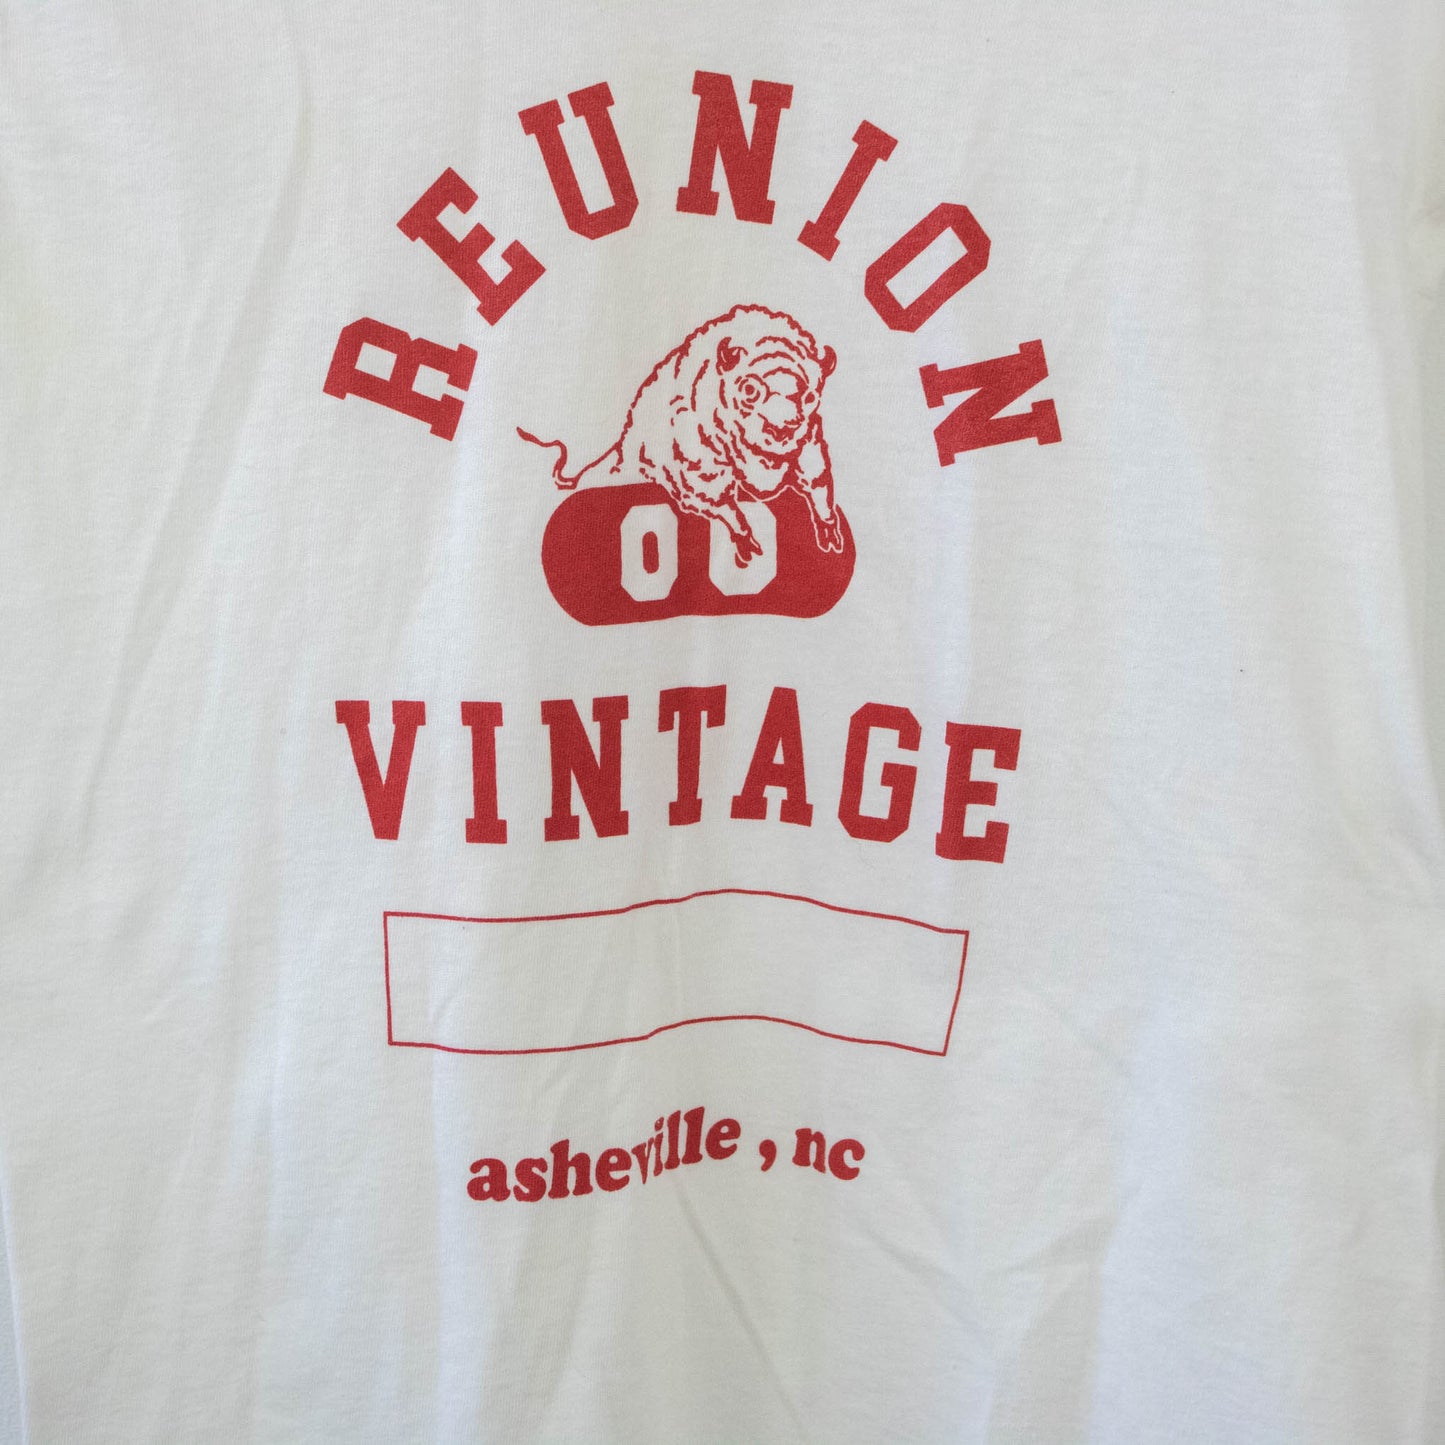 Vintage Unisex XS Small Reunion Vintage T Shirt (4)